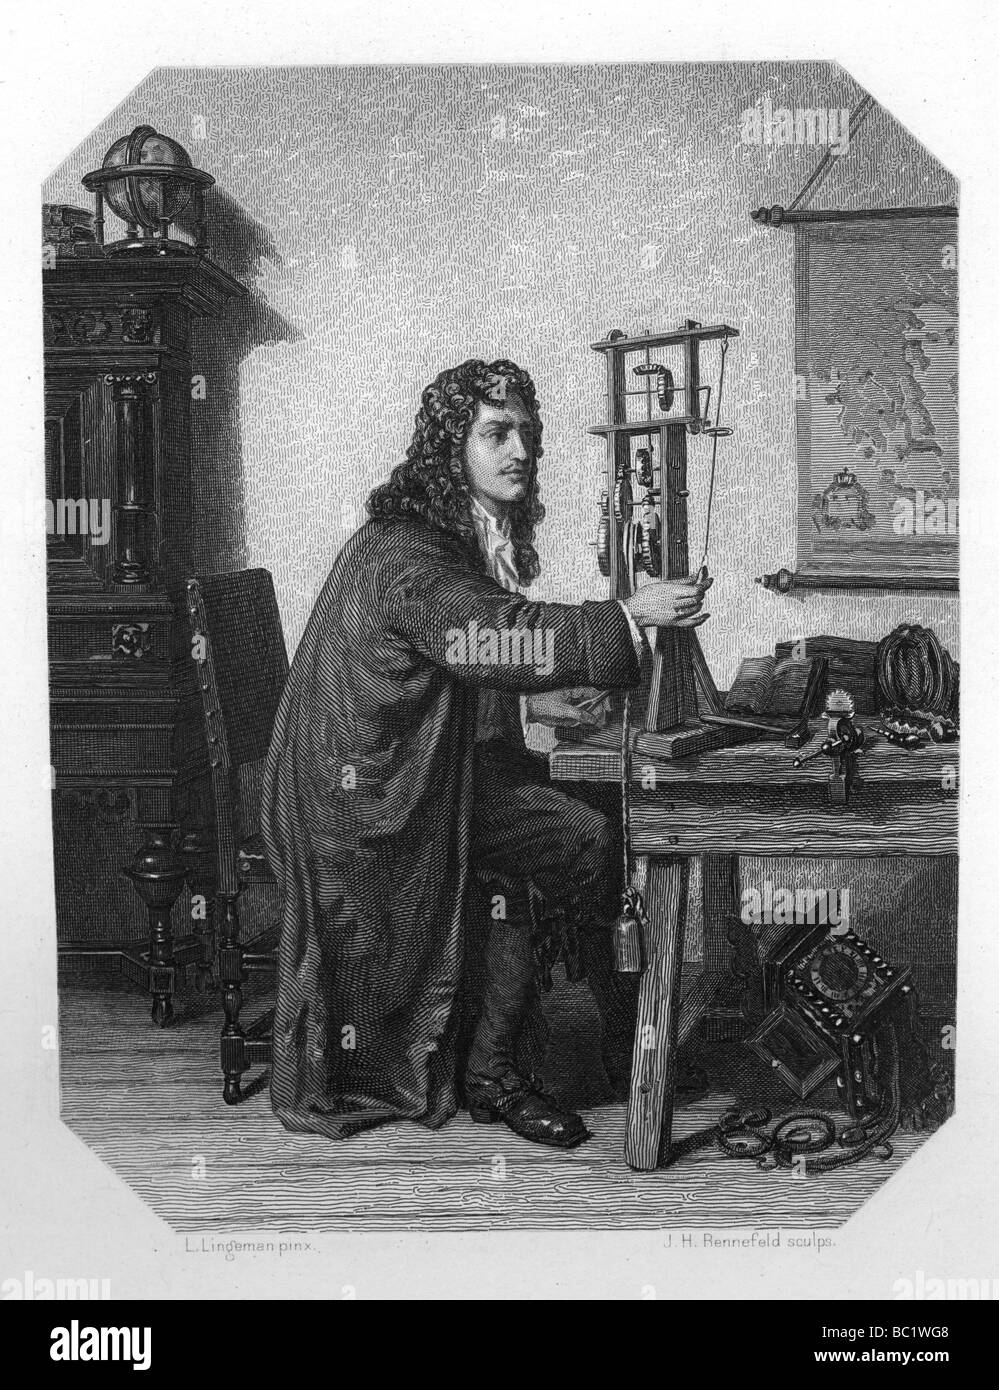 Christiaan Huygens, 17th century Dutch mathematician, astronomer and physicist, c1870.Artist: JH Rennefeld Stock Photo